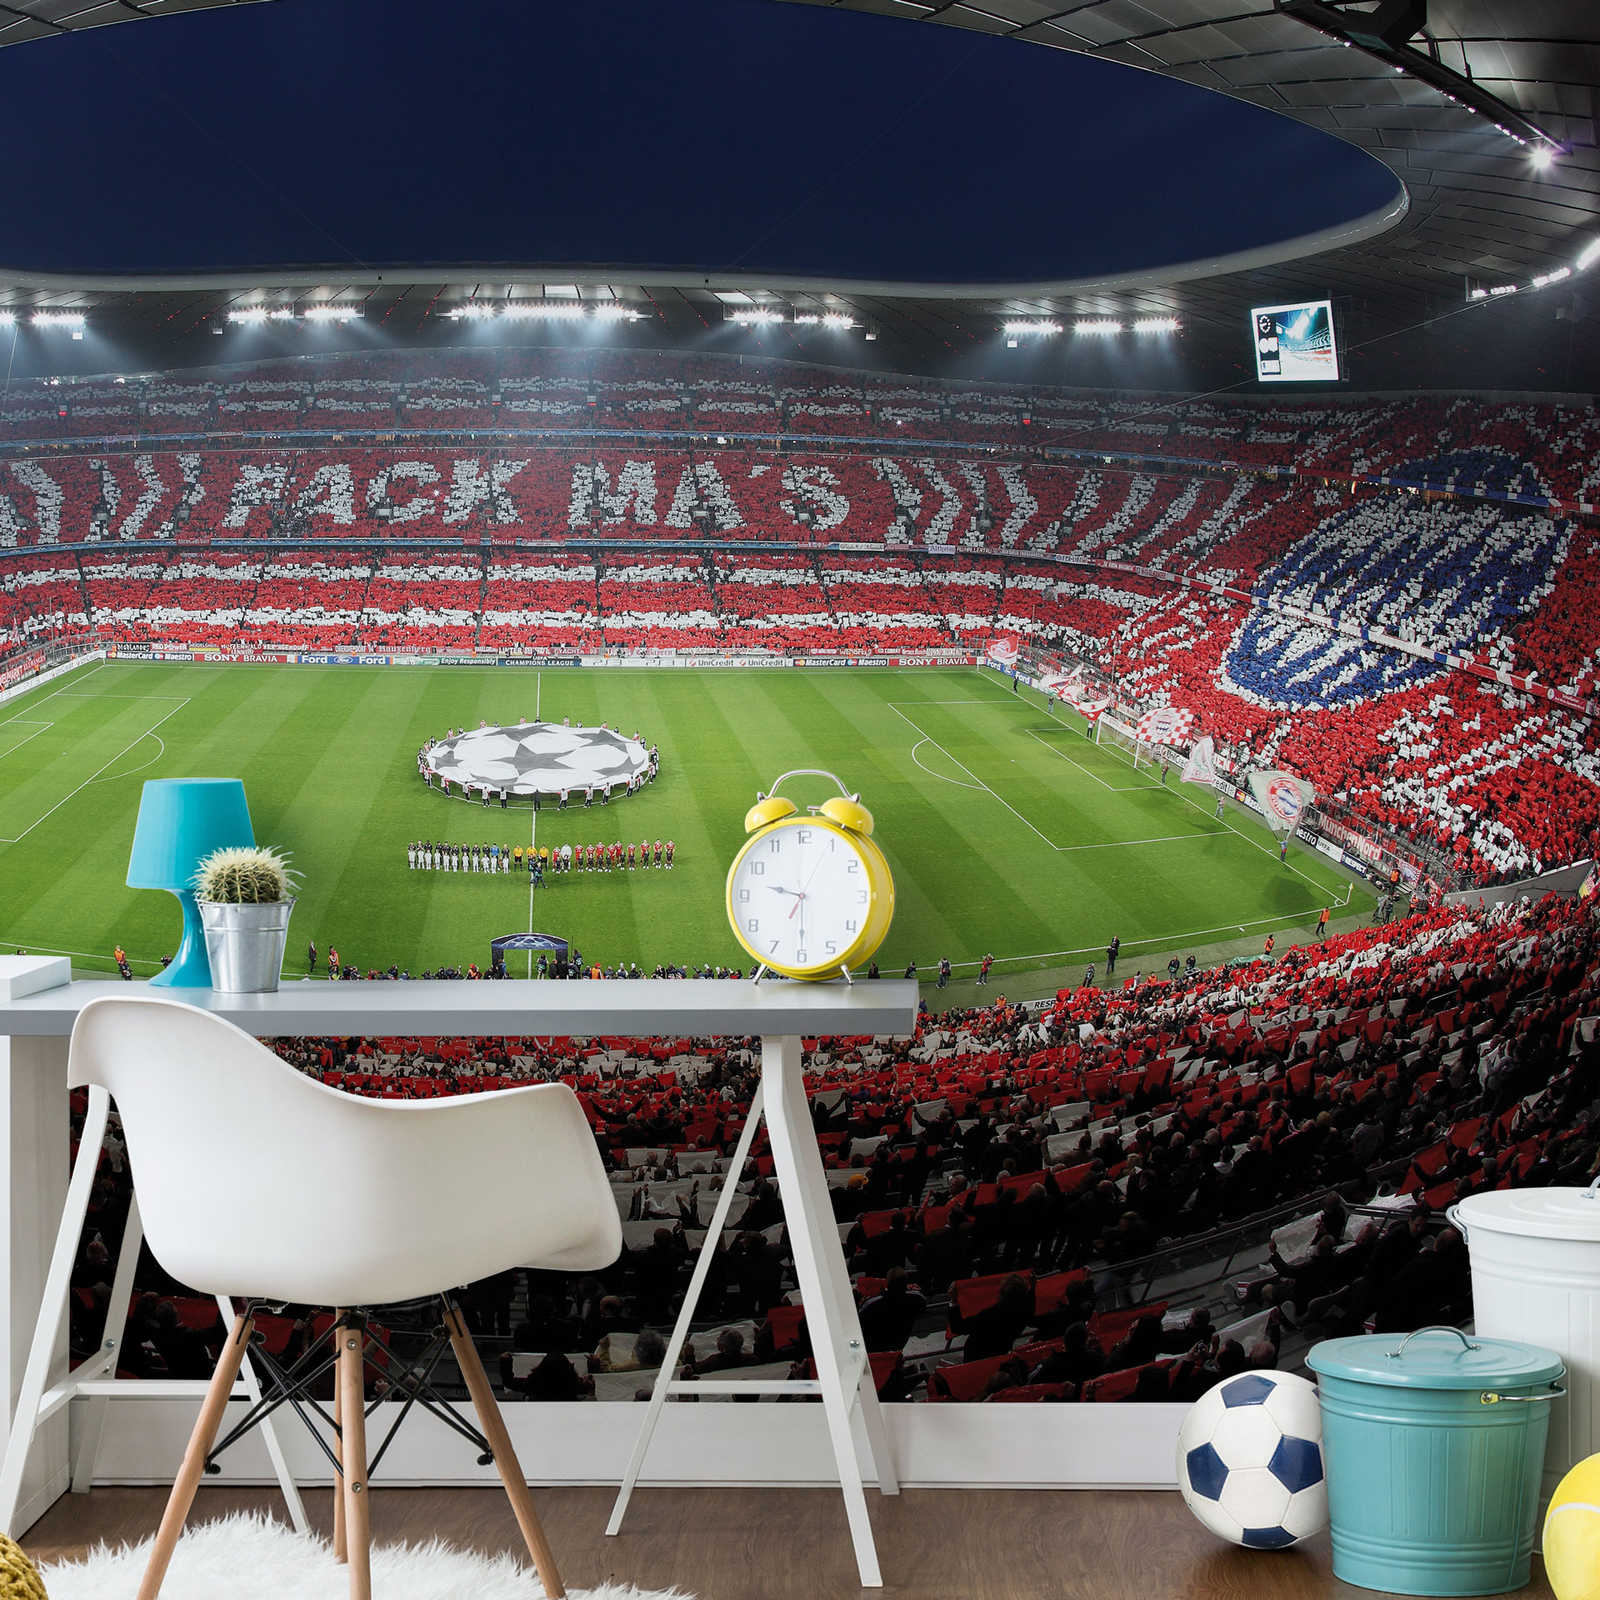             FC Bayern Stadium "Pack Ma's" mural
        